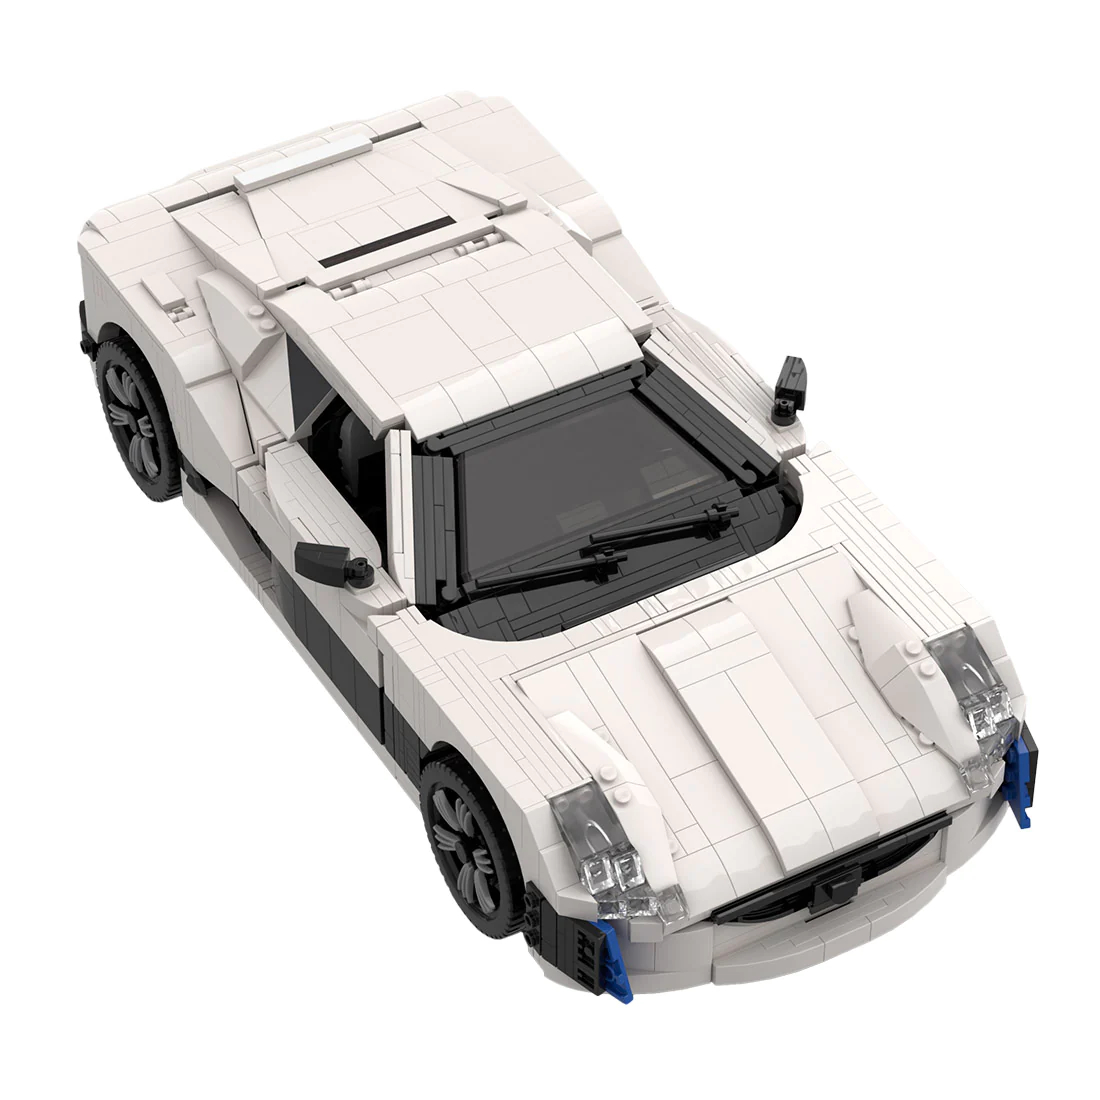 (Croatian LEGO enthusiast creates impressive Rimac car with 2412 bricks